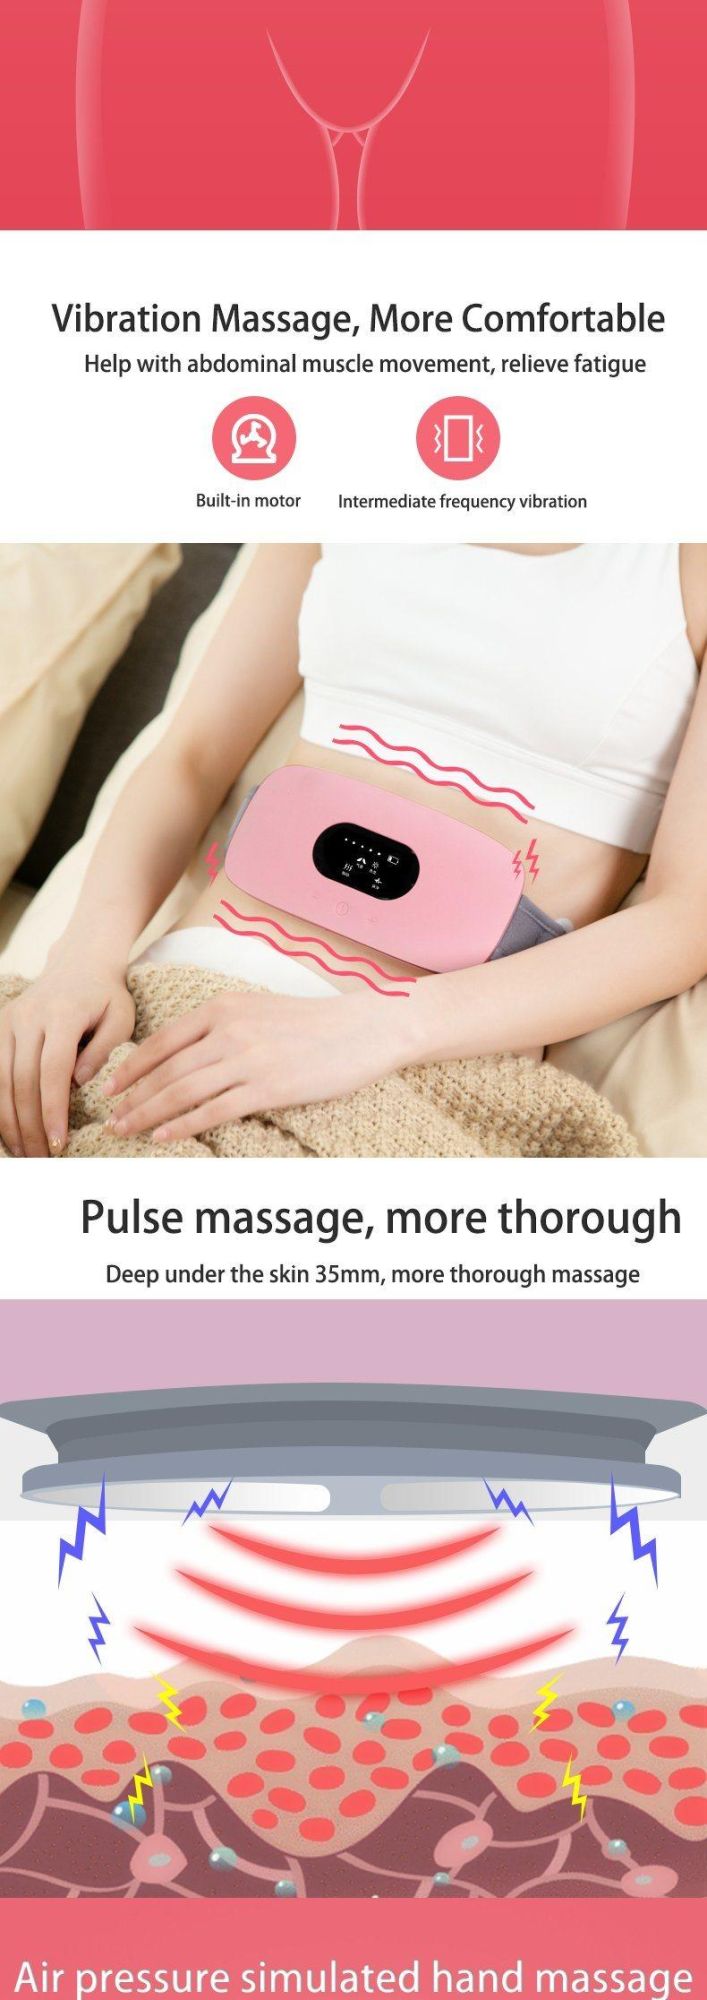 Hezheng Electric Shiatsu Vibrating Heating Weight Loss Slimming Belt Belly Massager